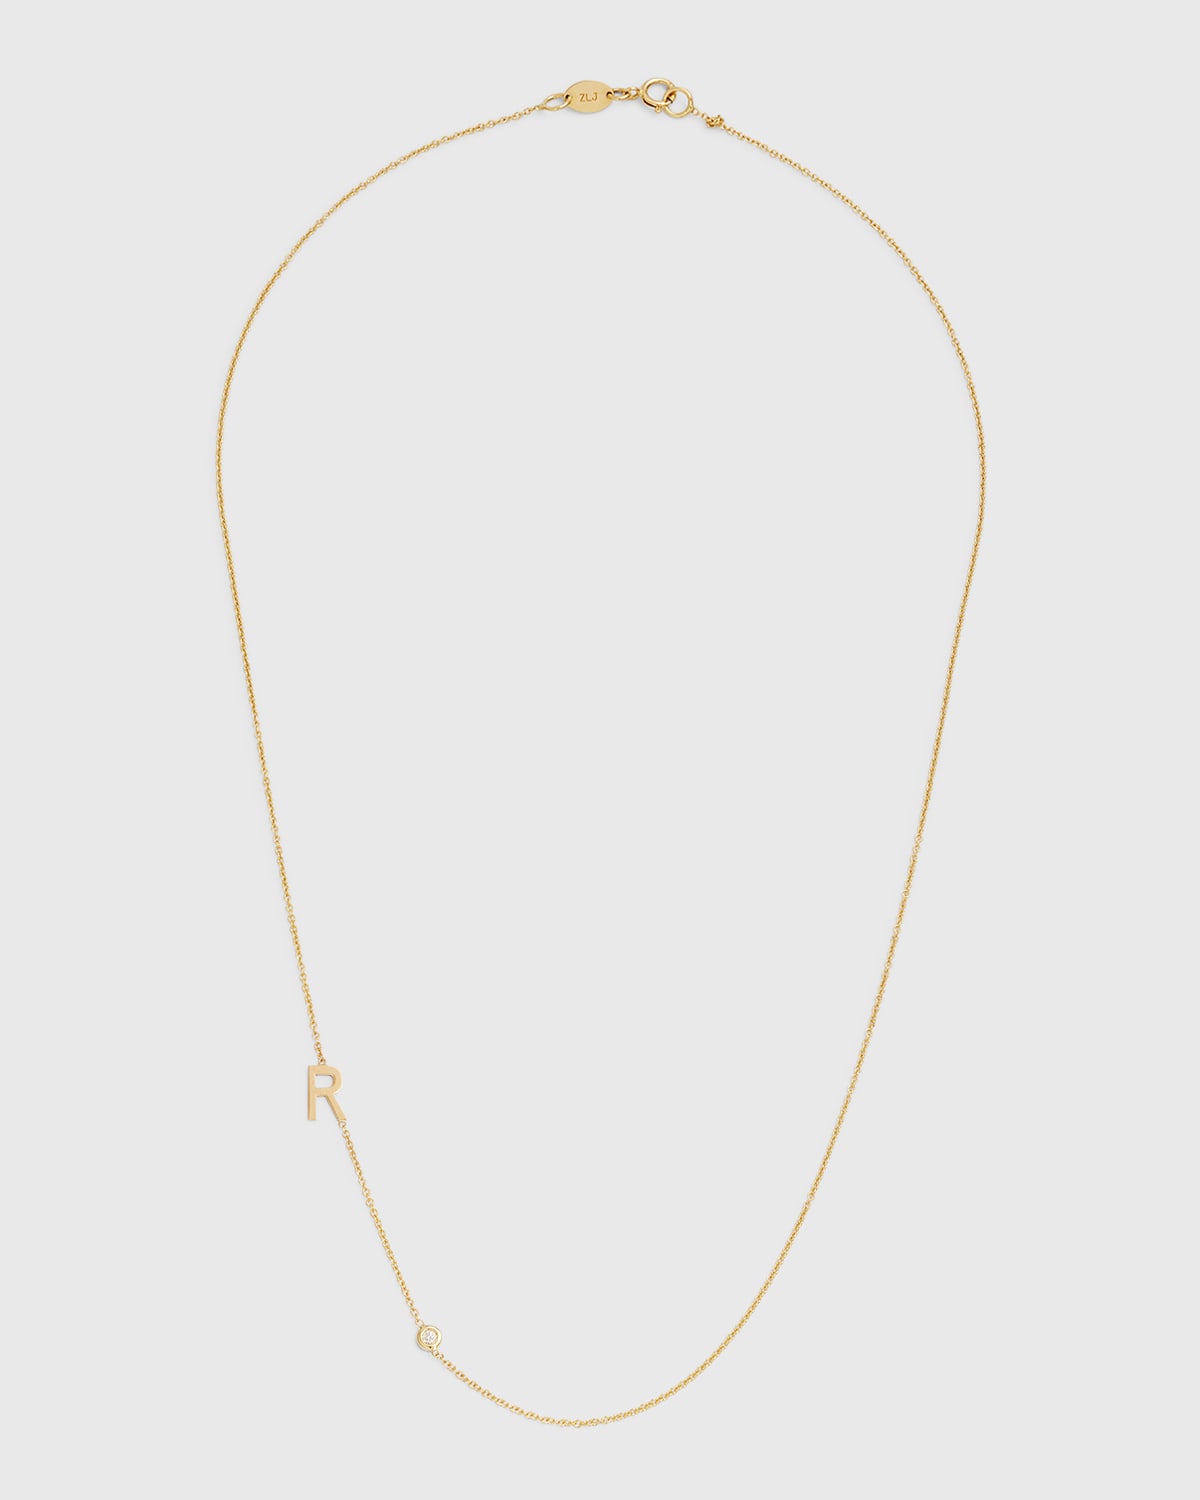 Zoe Lev Jewelry 14k Yellow Gold Side Chic Personalized Asymmetric Initial & Diamond Bezel Necklace